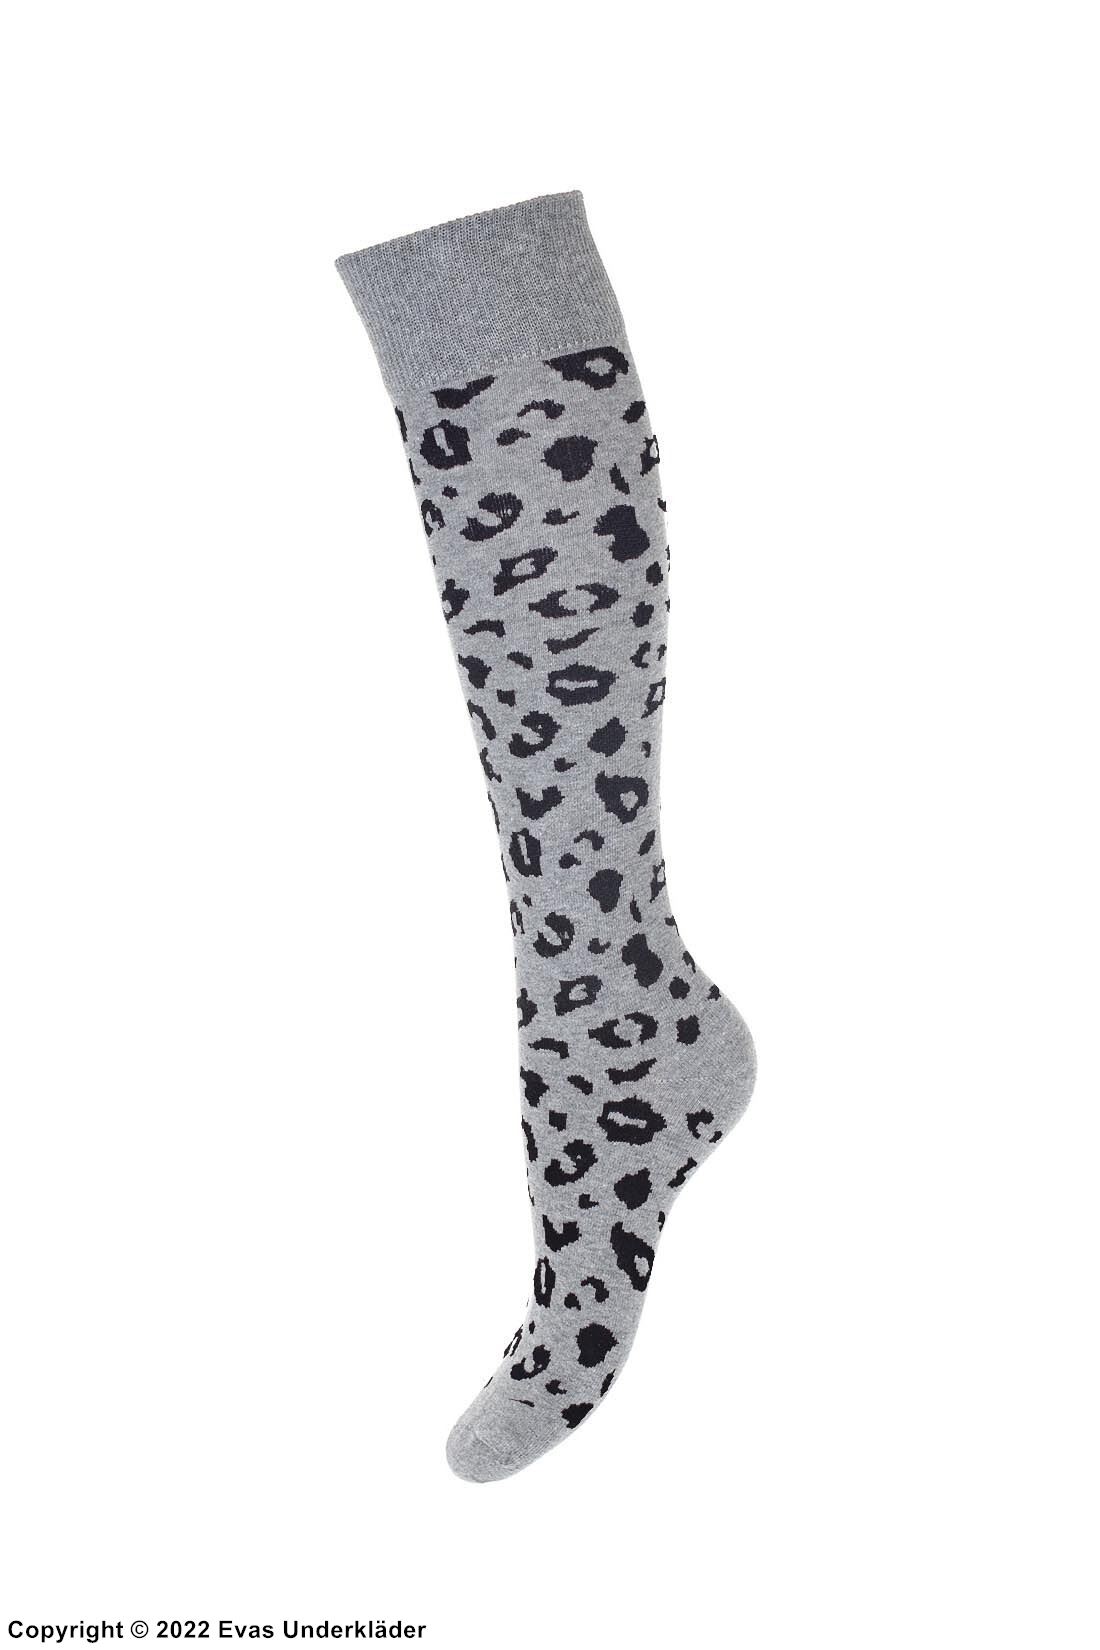 Knee socks, high quality cotton, leopard (pattern)